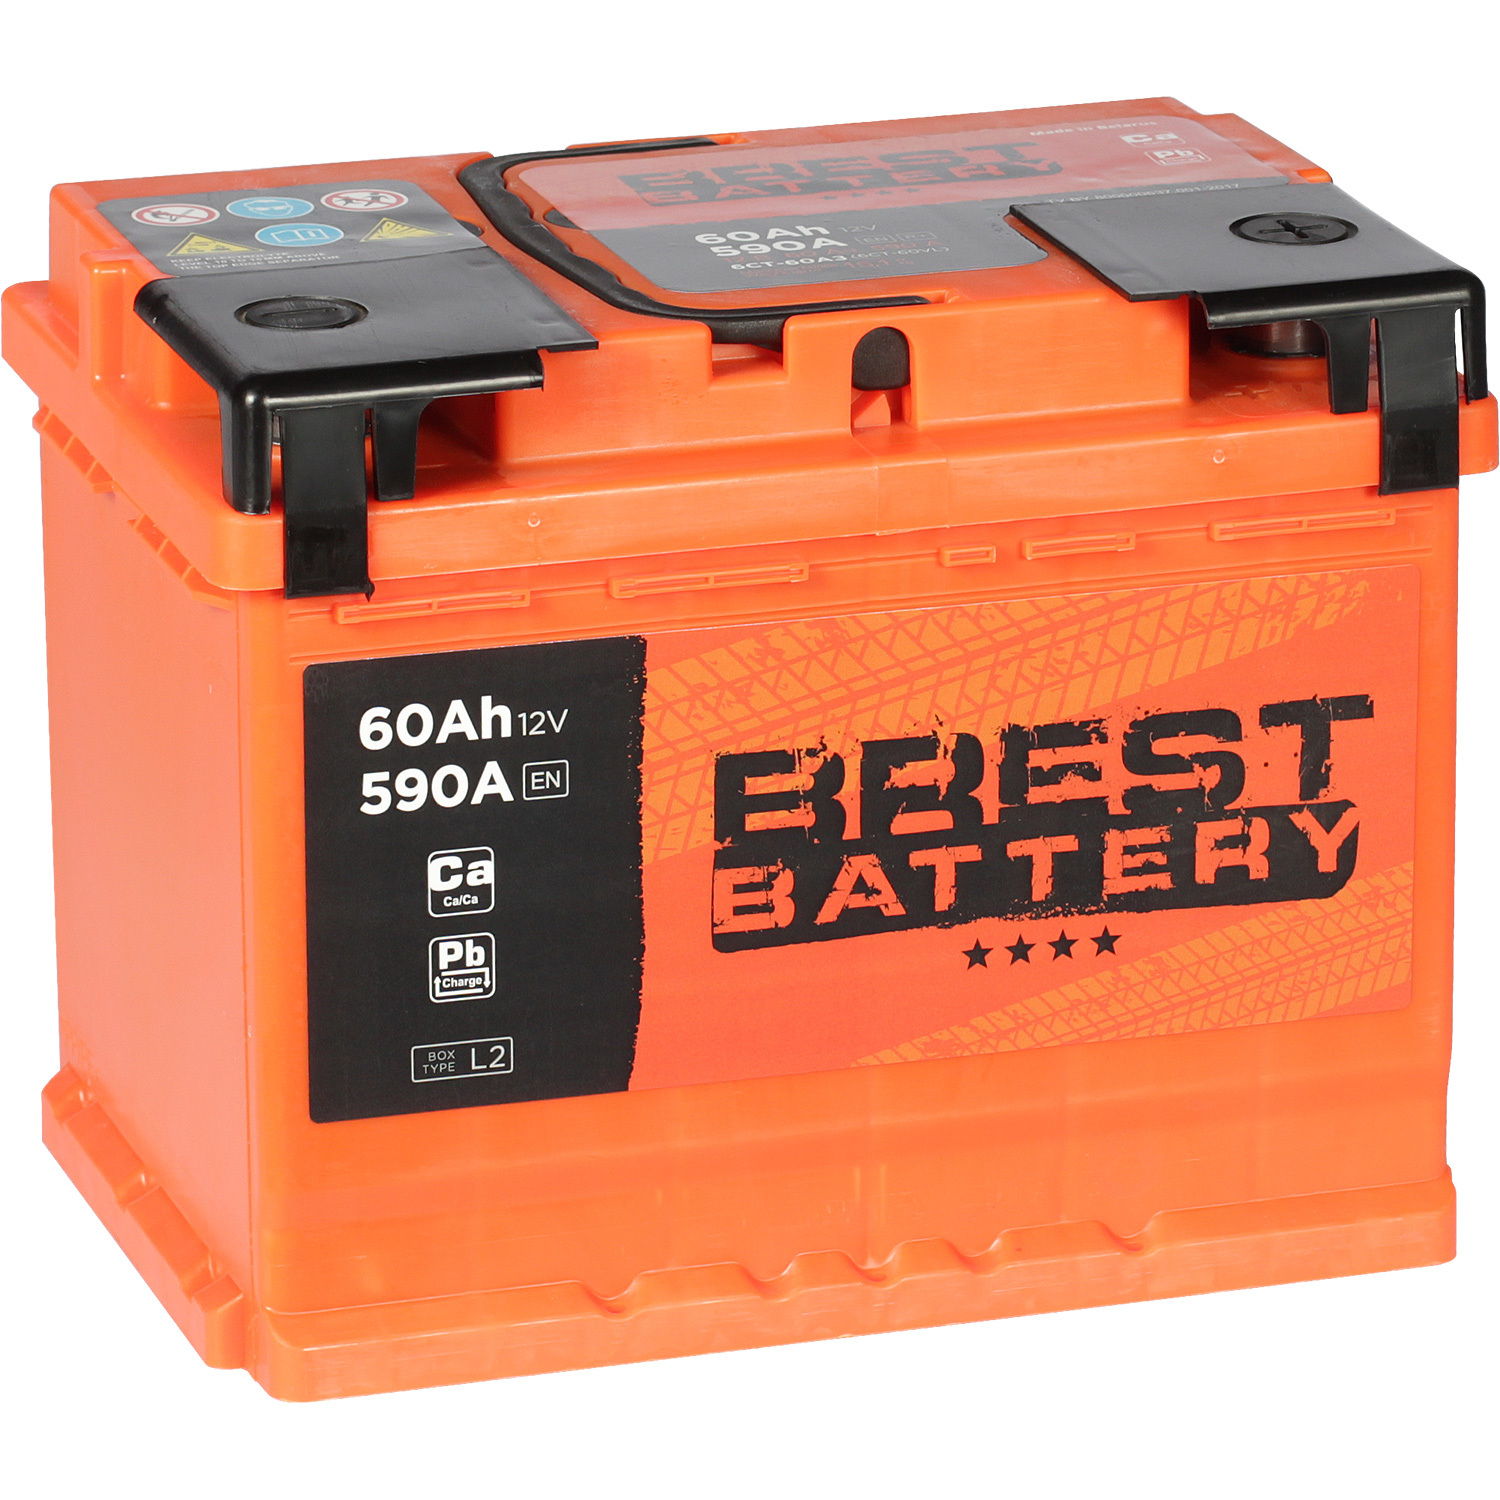 brest battery автомобильный аккумулятор brest battery 110 ач обратная полярность l5 Brest Battery Автомобильный аккумулятор Brest Battery 60 Ач обратная полярность L2